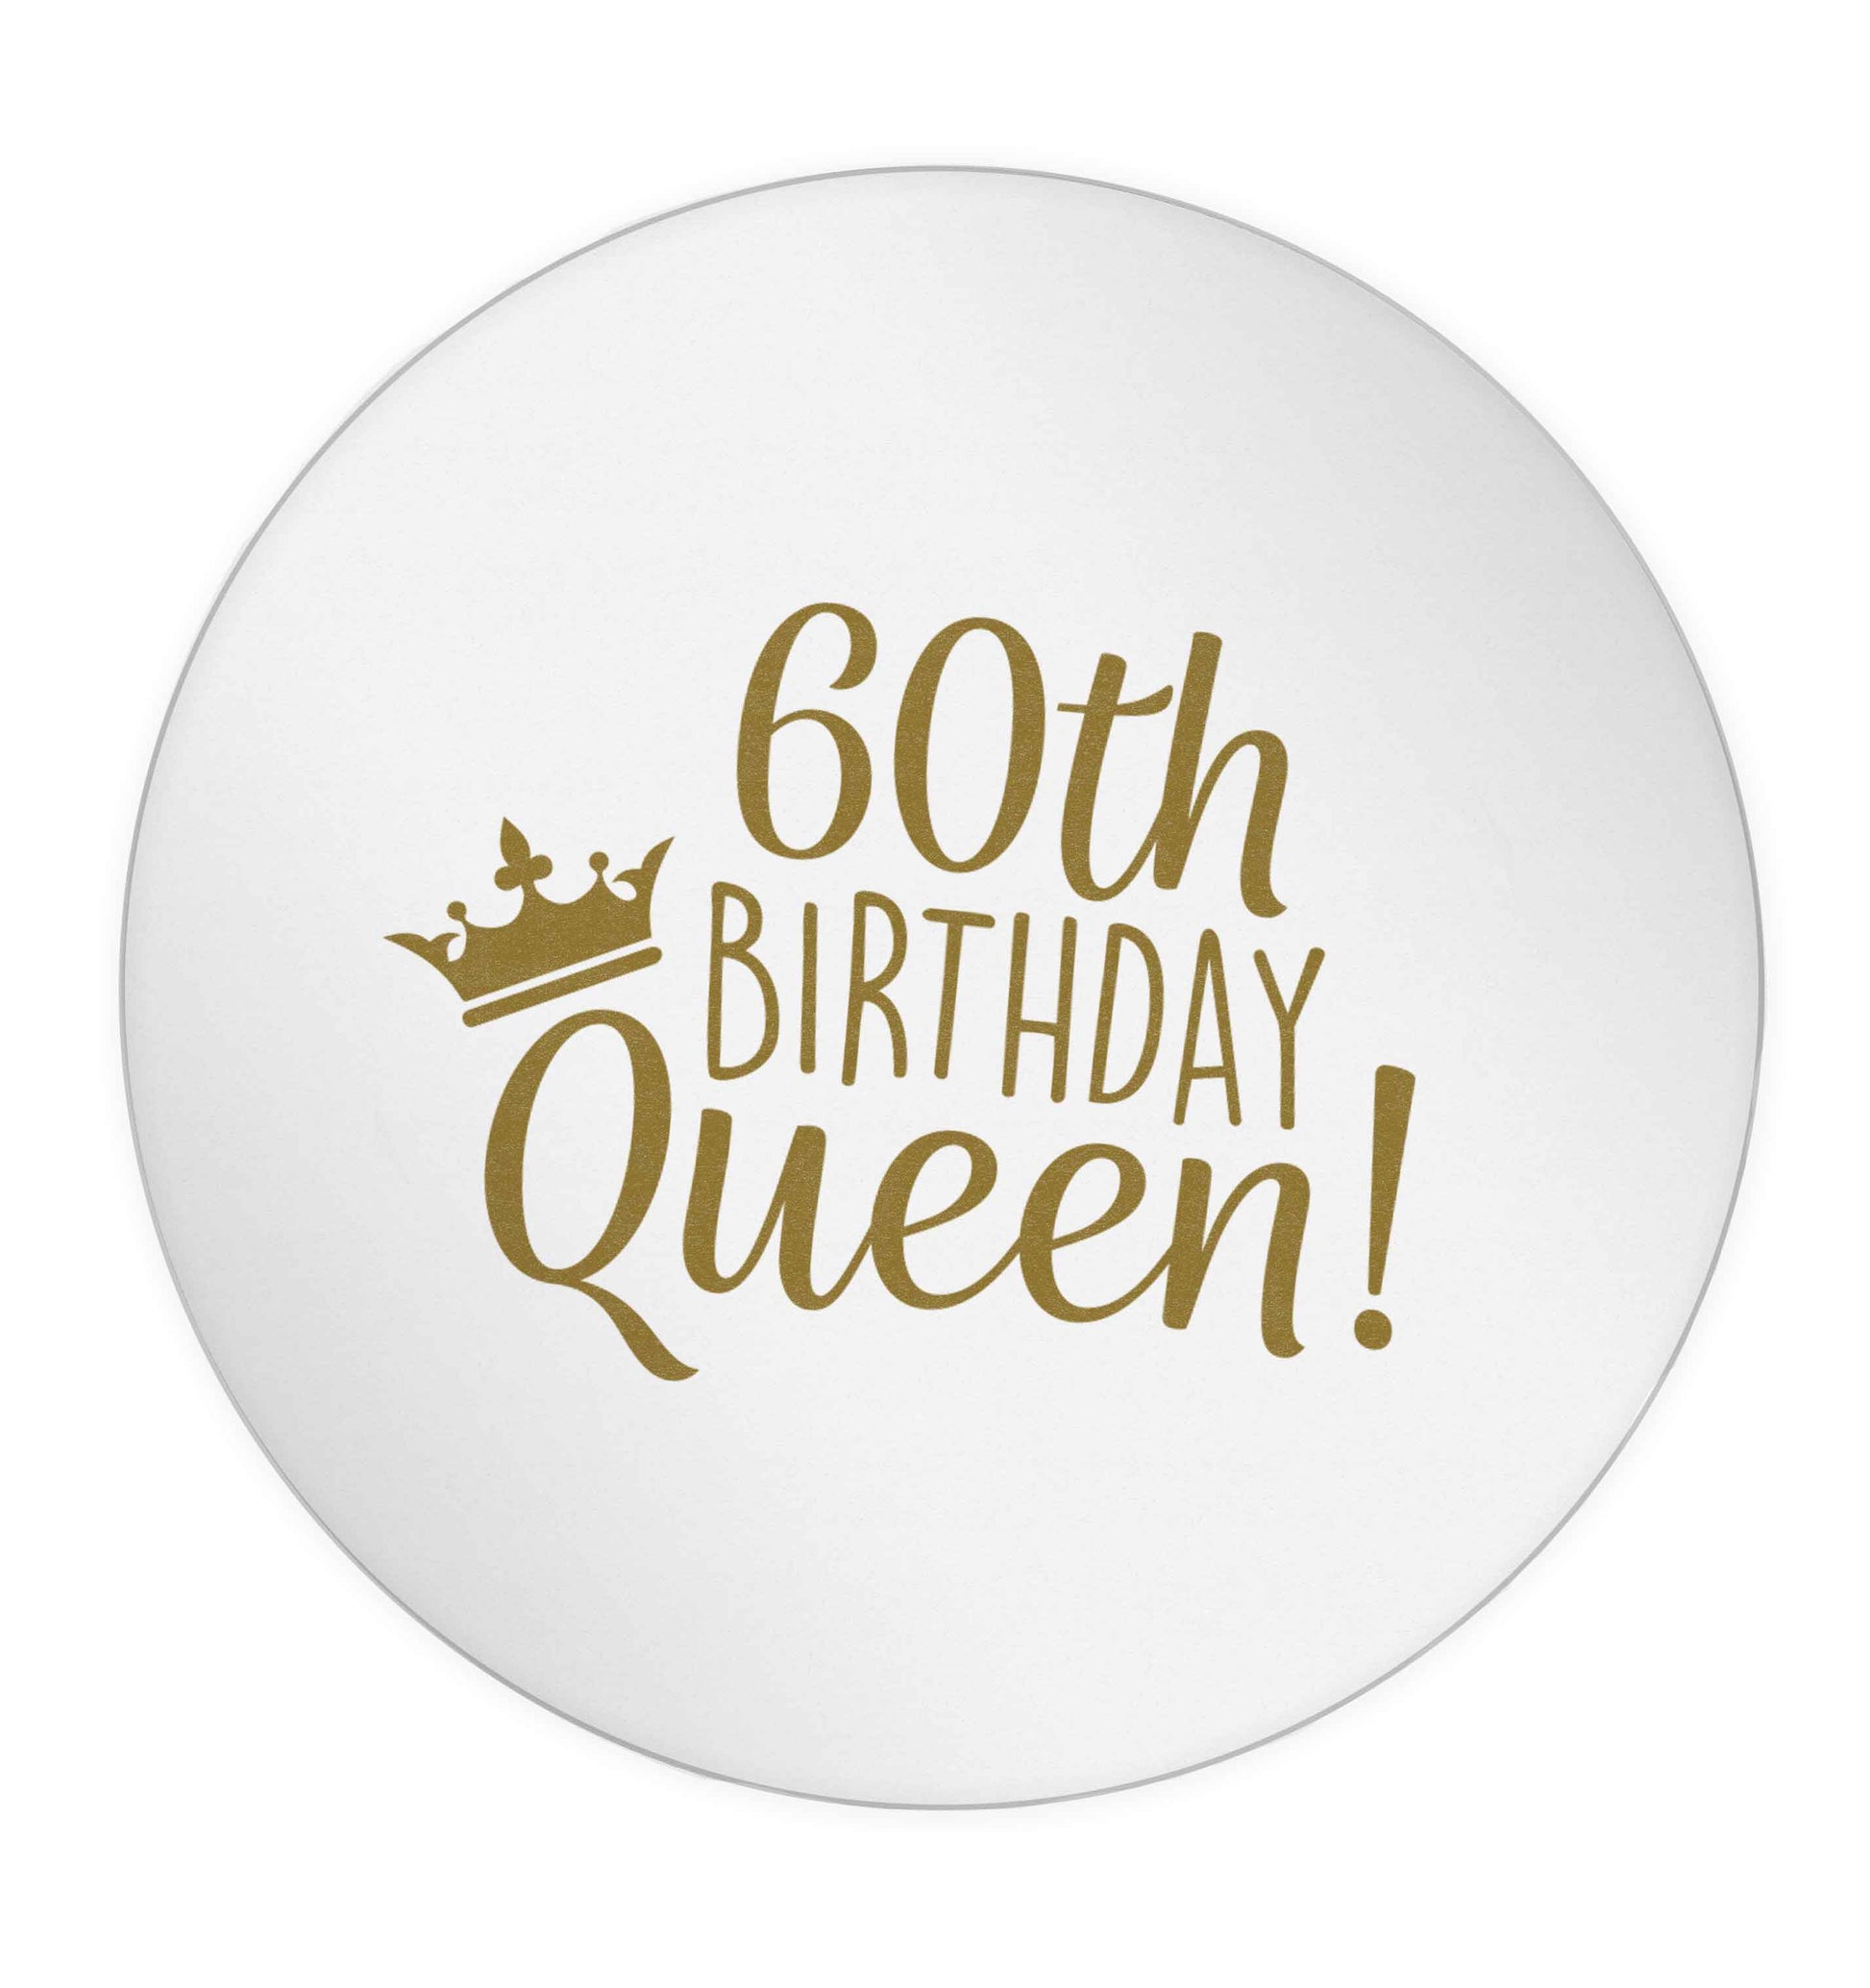 60th birthday Queen 24 @ 45mm matt circle stickers